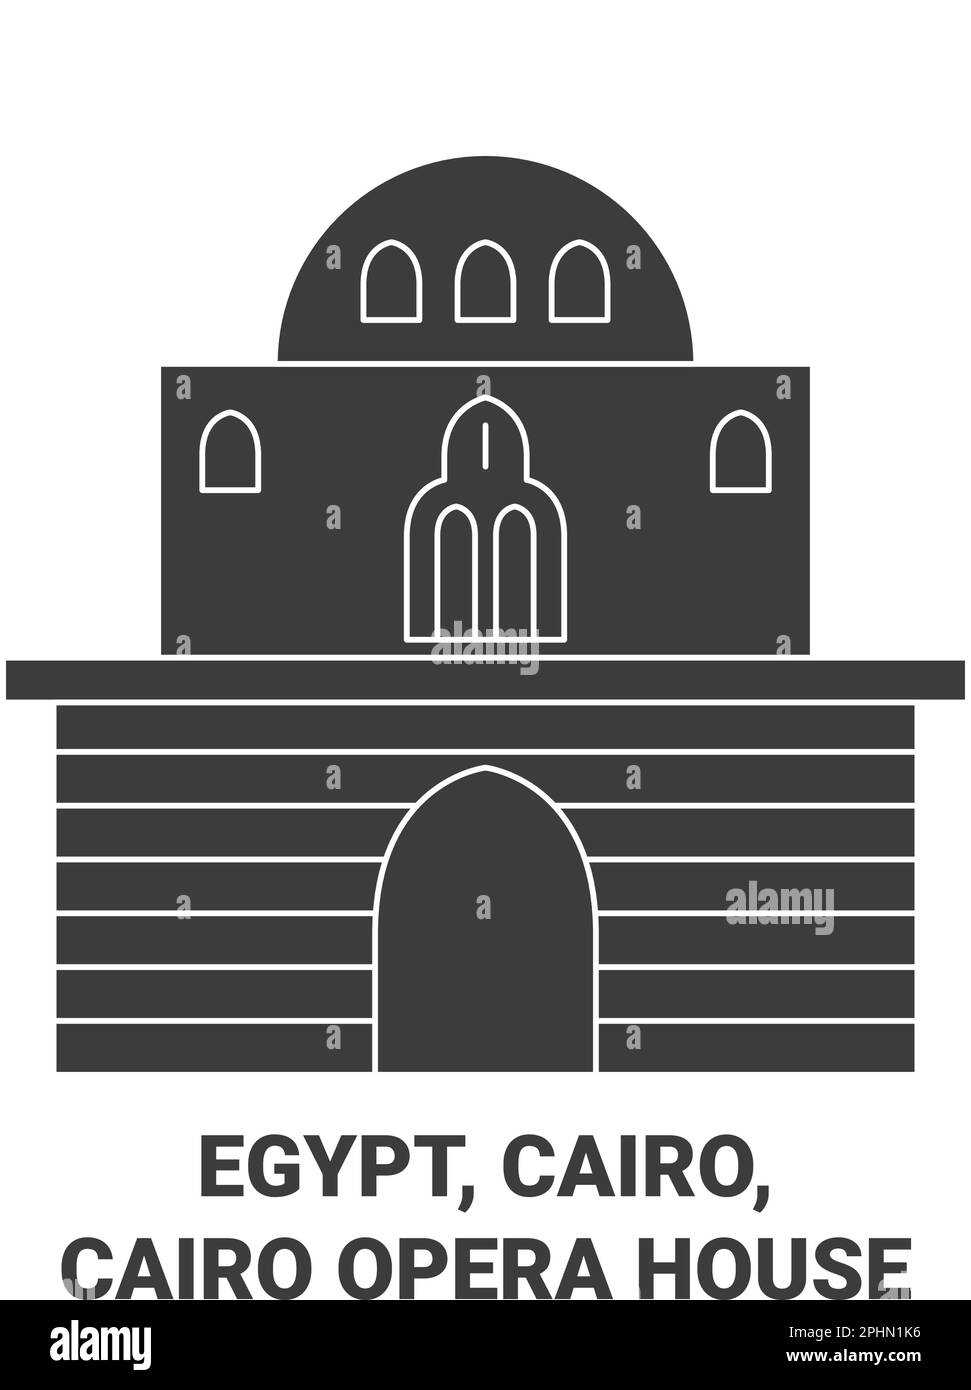 Egypt, Cairo, Cairo Opera House travel landmark vector illustration Stock Vector